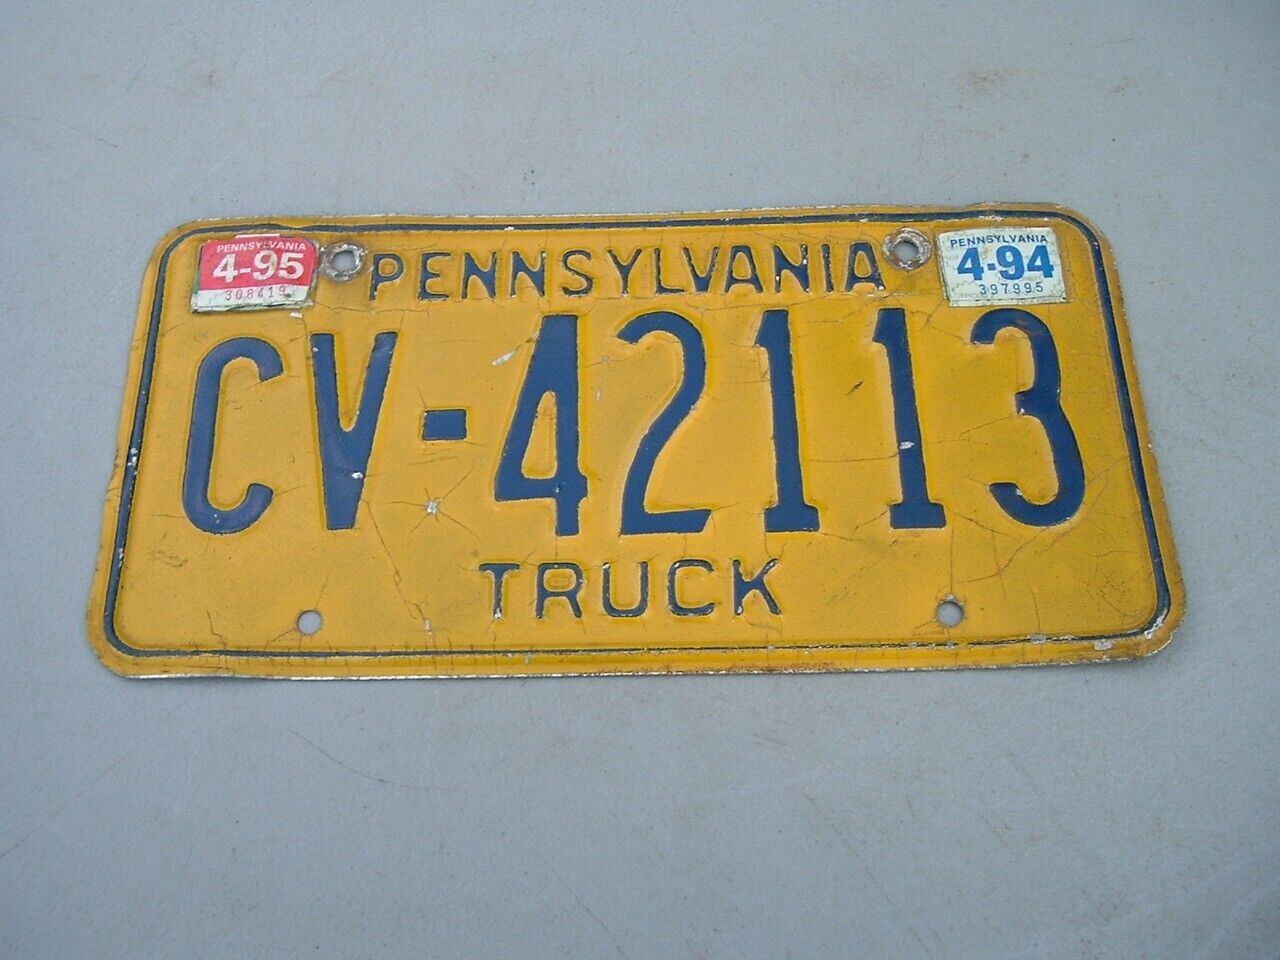 Pennsylvania 1995 Truck License Plate CV 42113